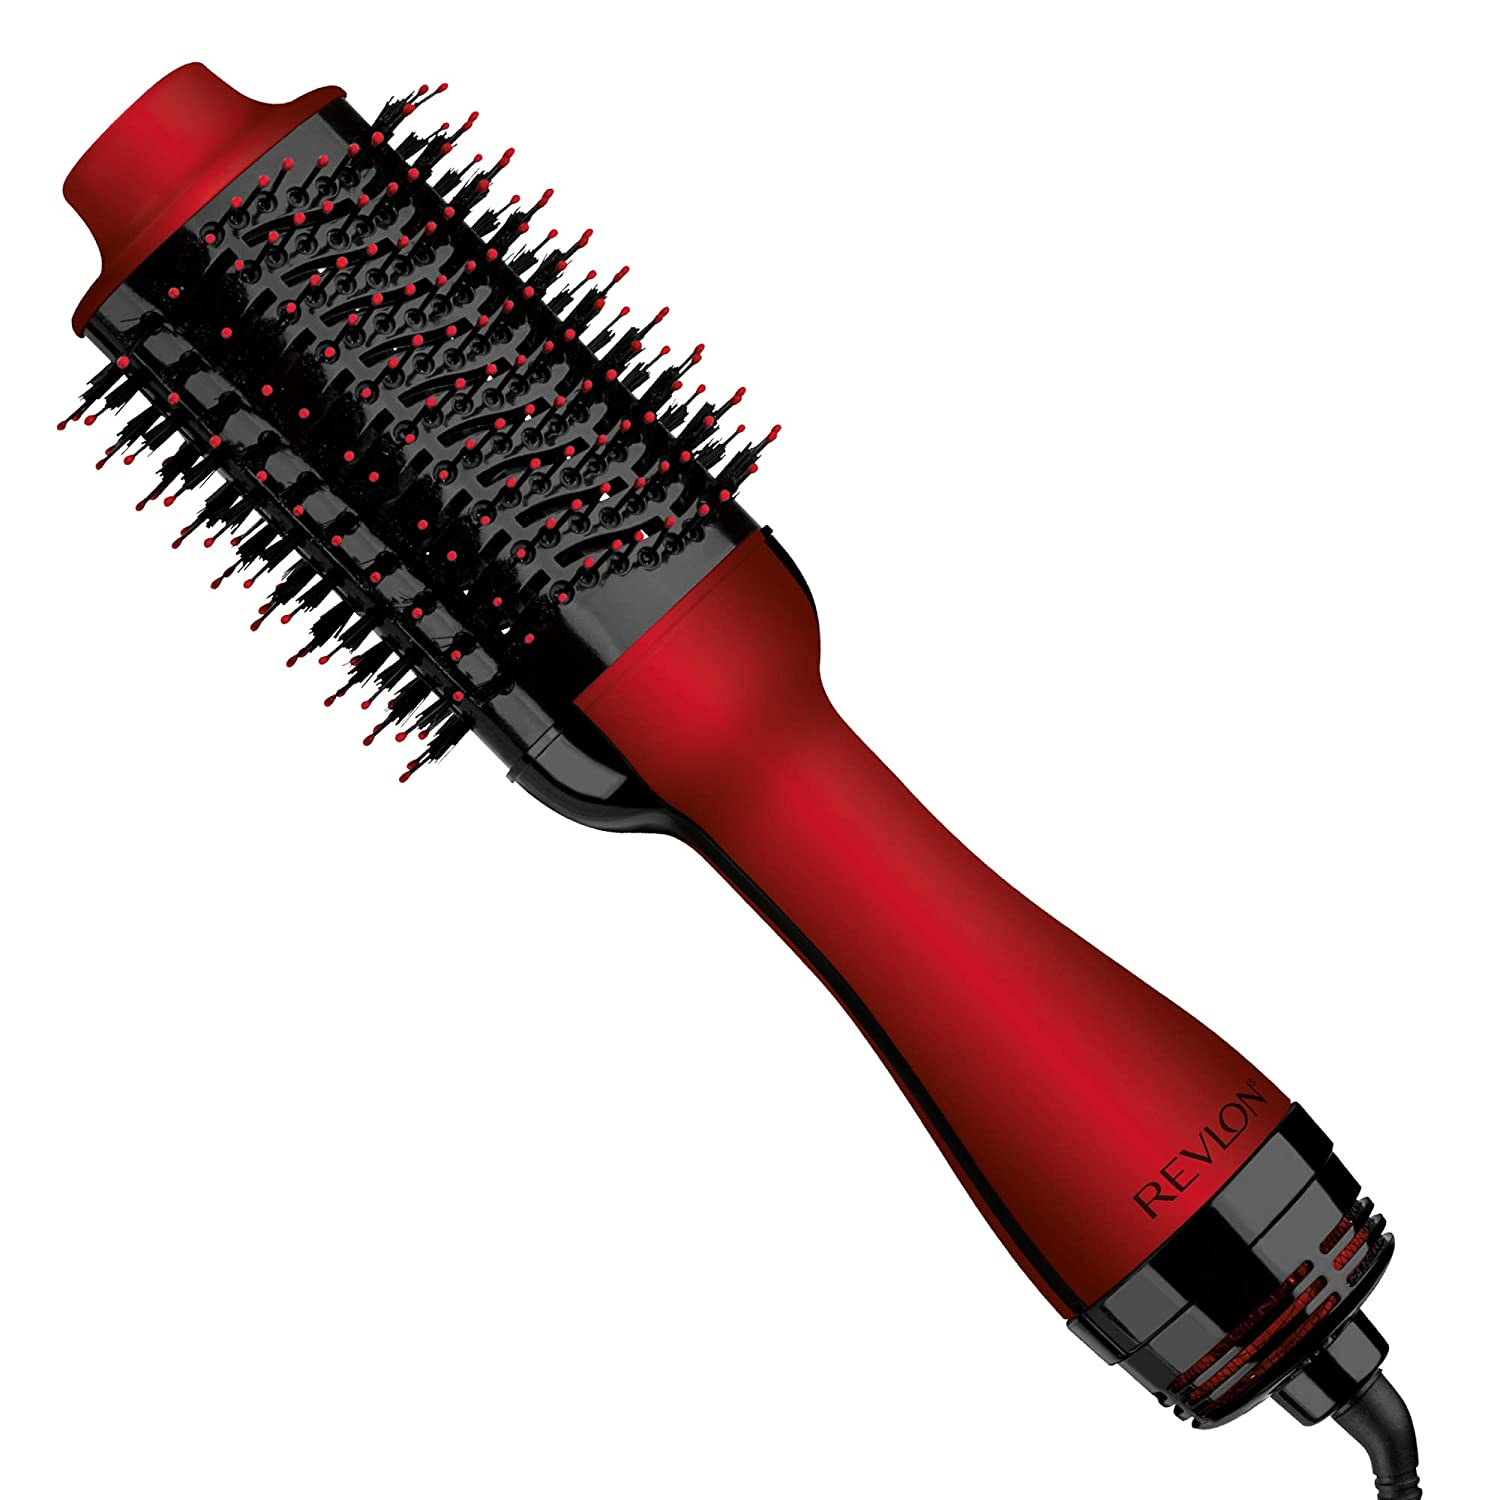 Amazon.com: Revlon One-Step Hair Dryer and Volumizer Hot Air Brush, Red: Beauty $28.88